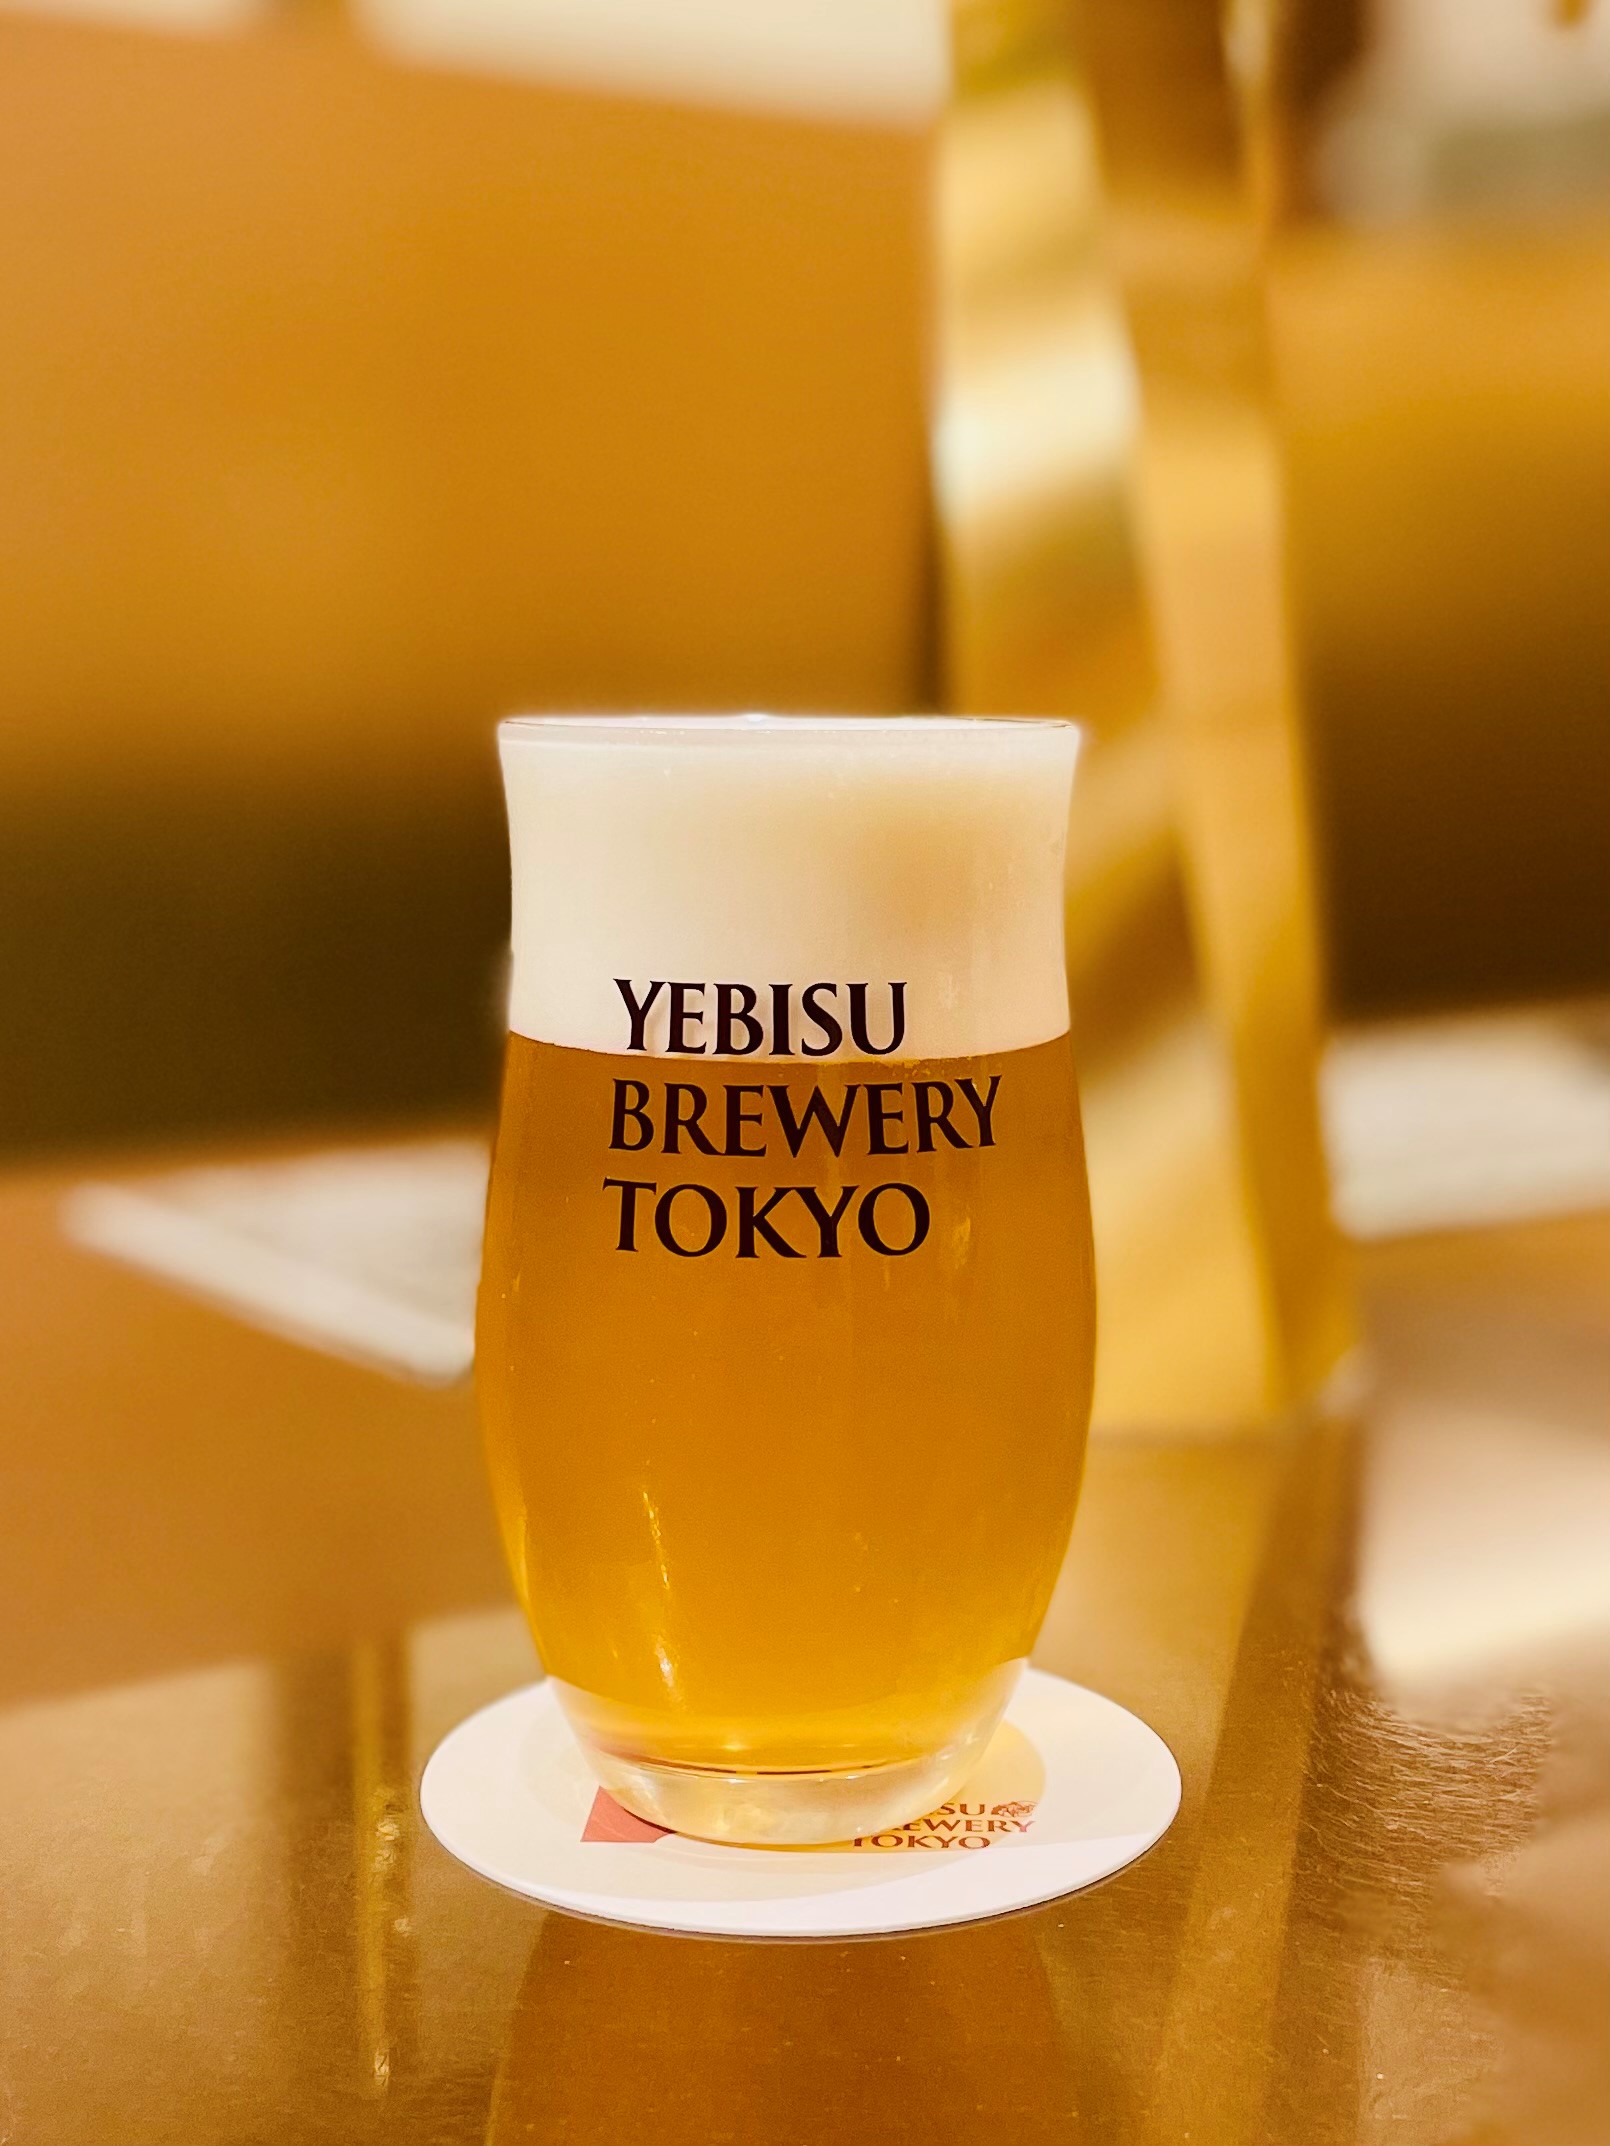 「YEBISU BREWERY TOKYO」でつくられたここでしか飲めない数量限定ビール「Proto Juicy ale」4月25日発売のサブ画像1